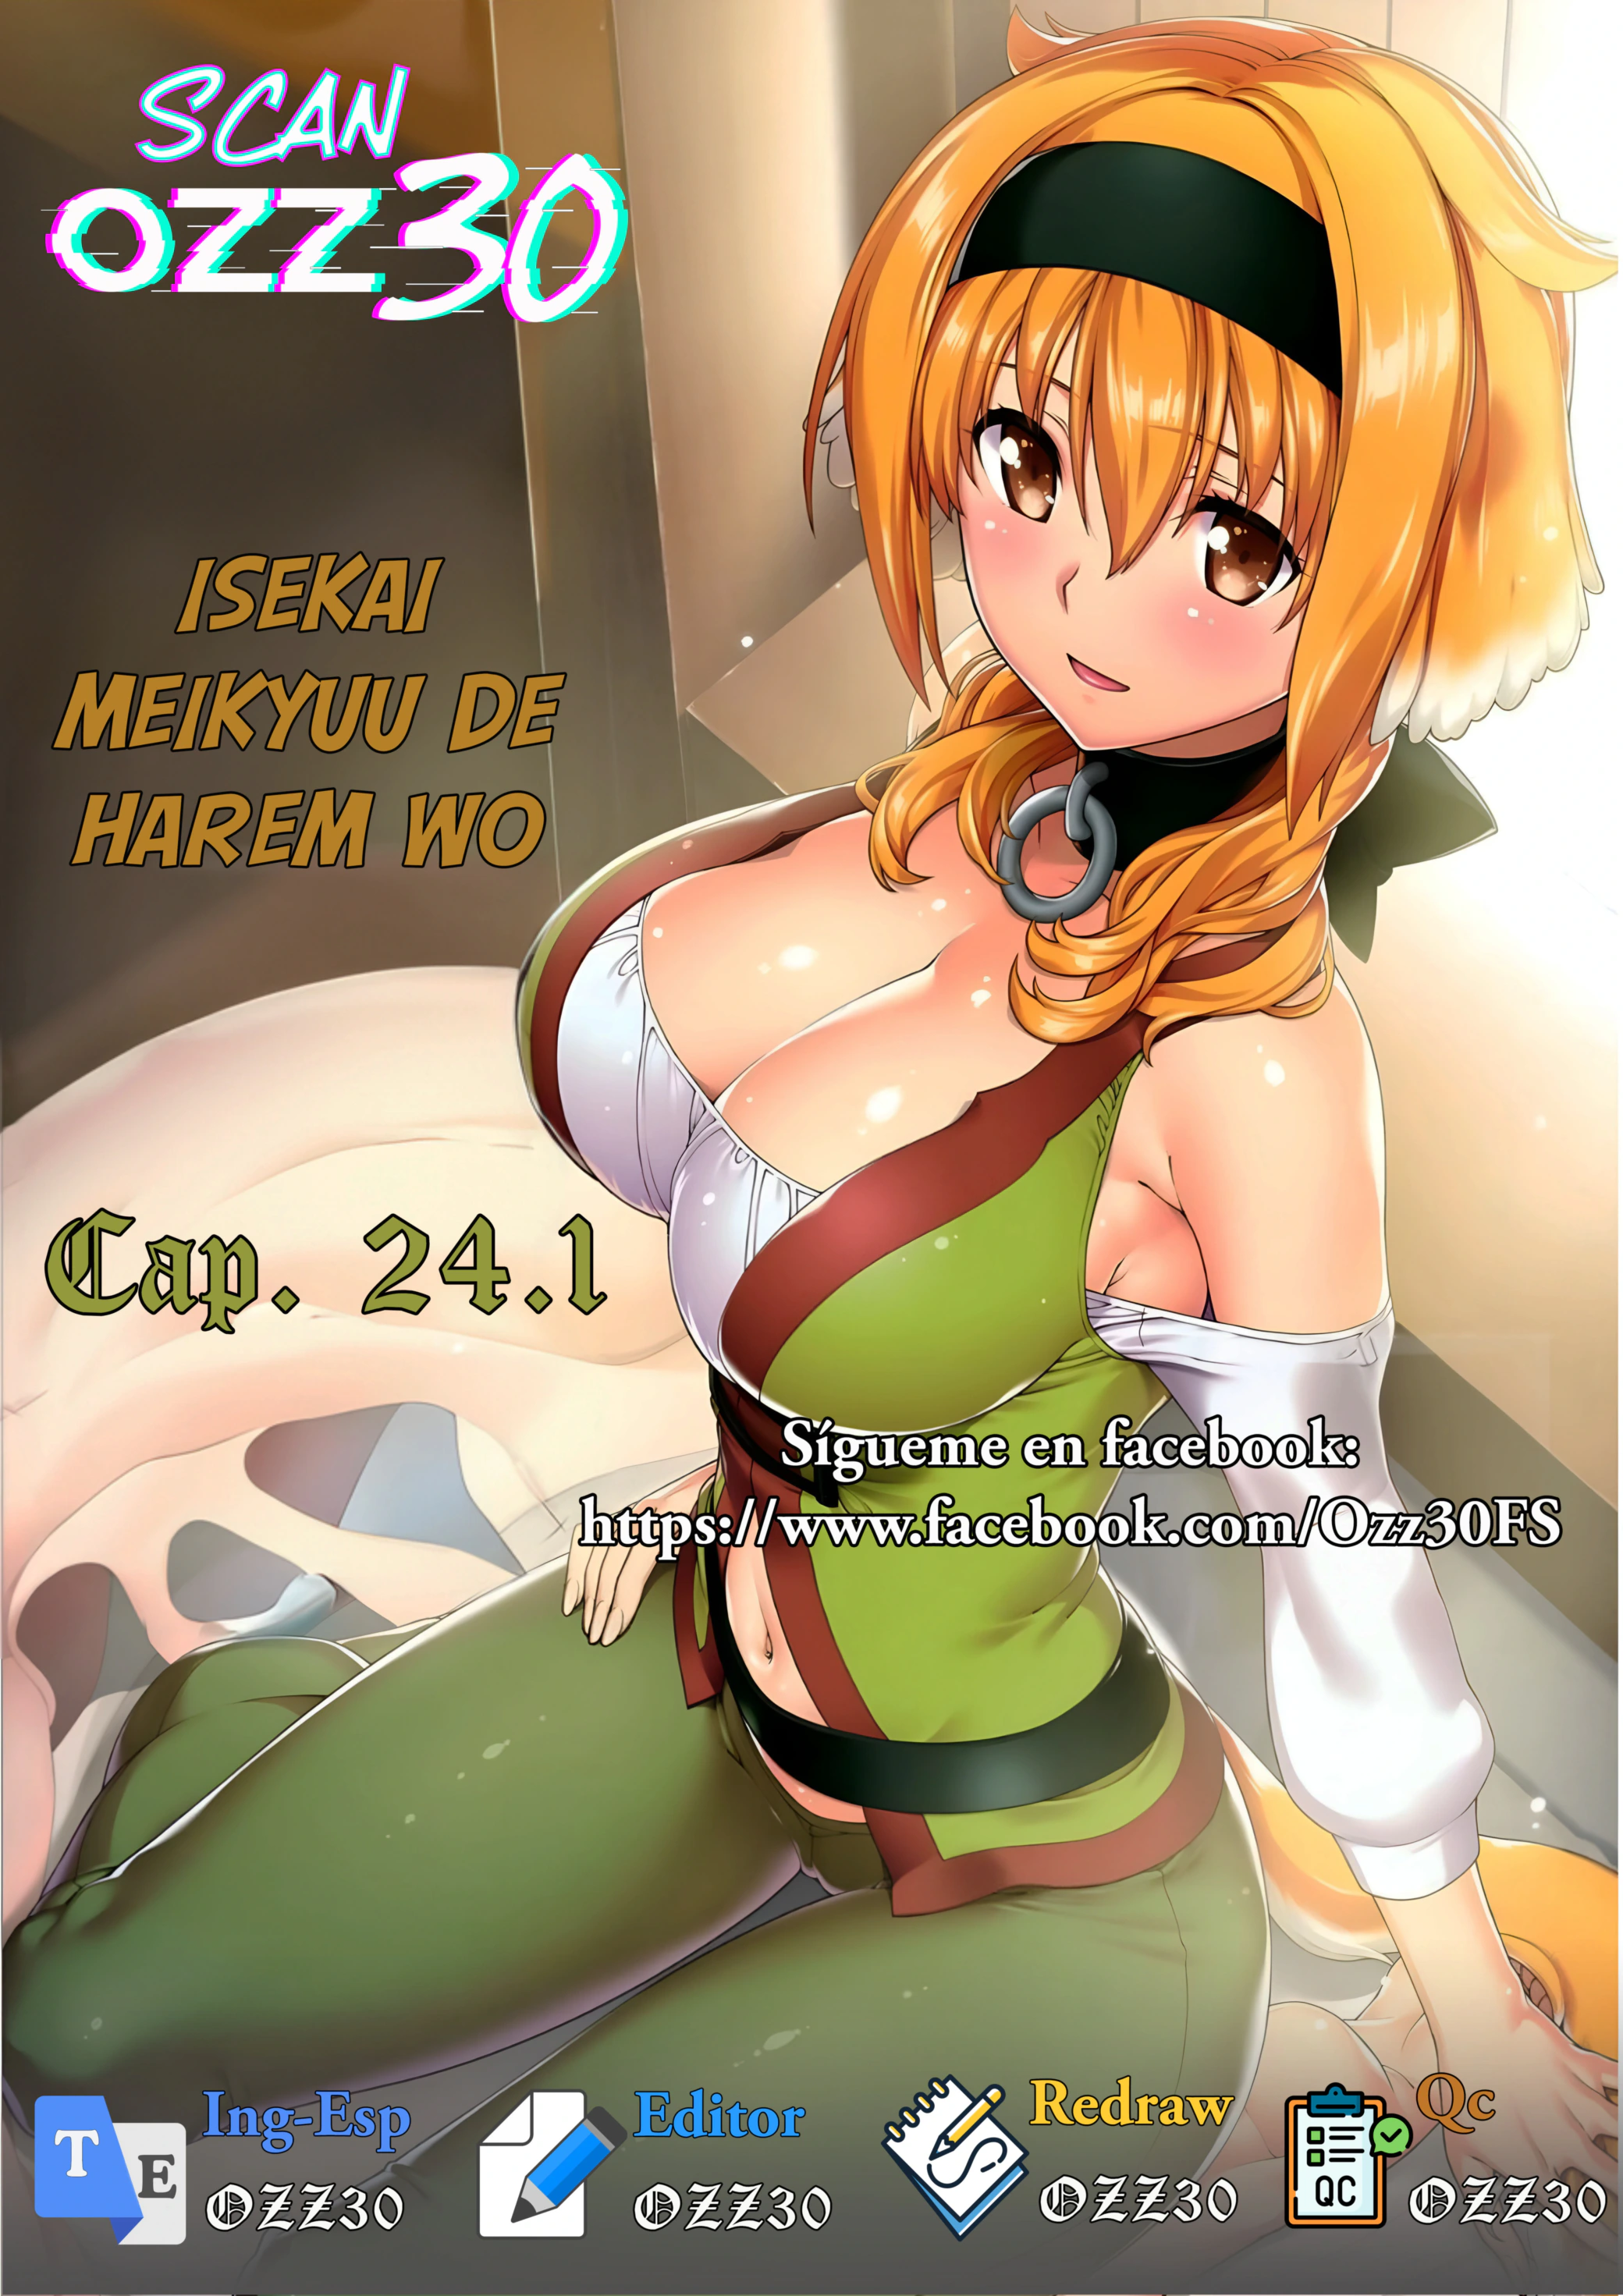 Isekai Meikyuu de Harem wo Capítulo 20.6 - Manga Online